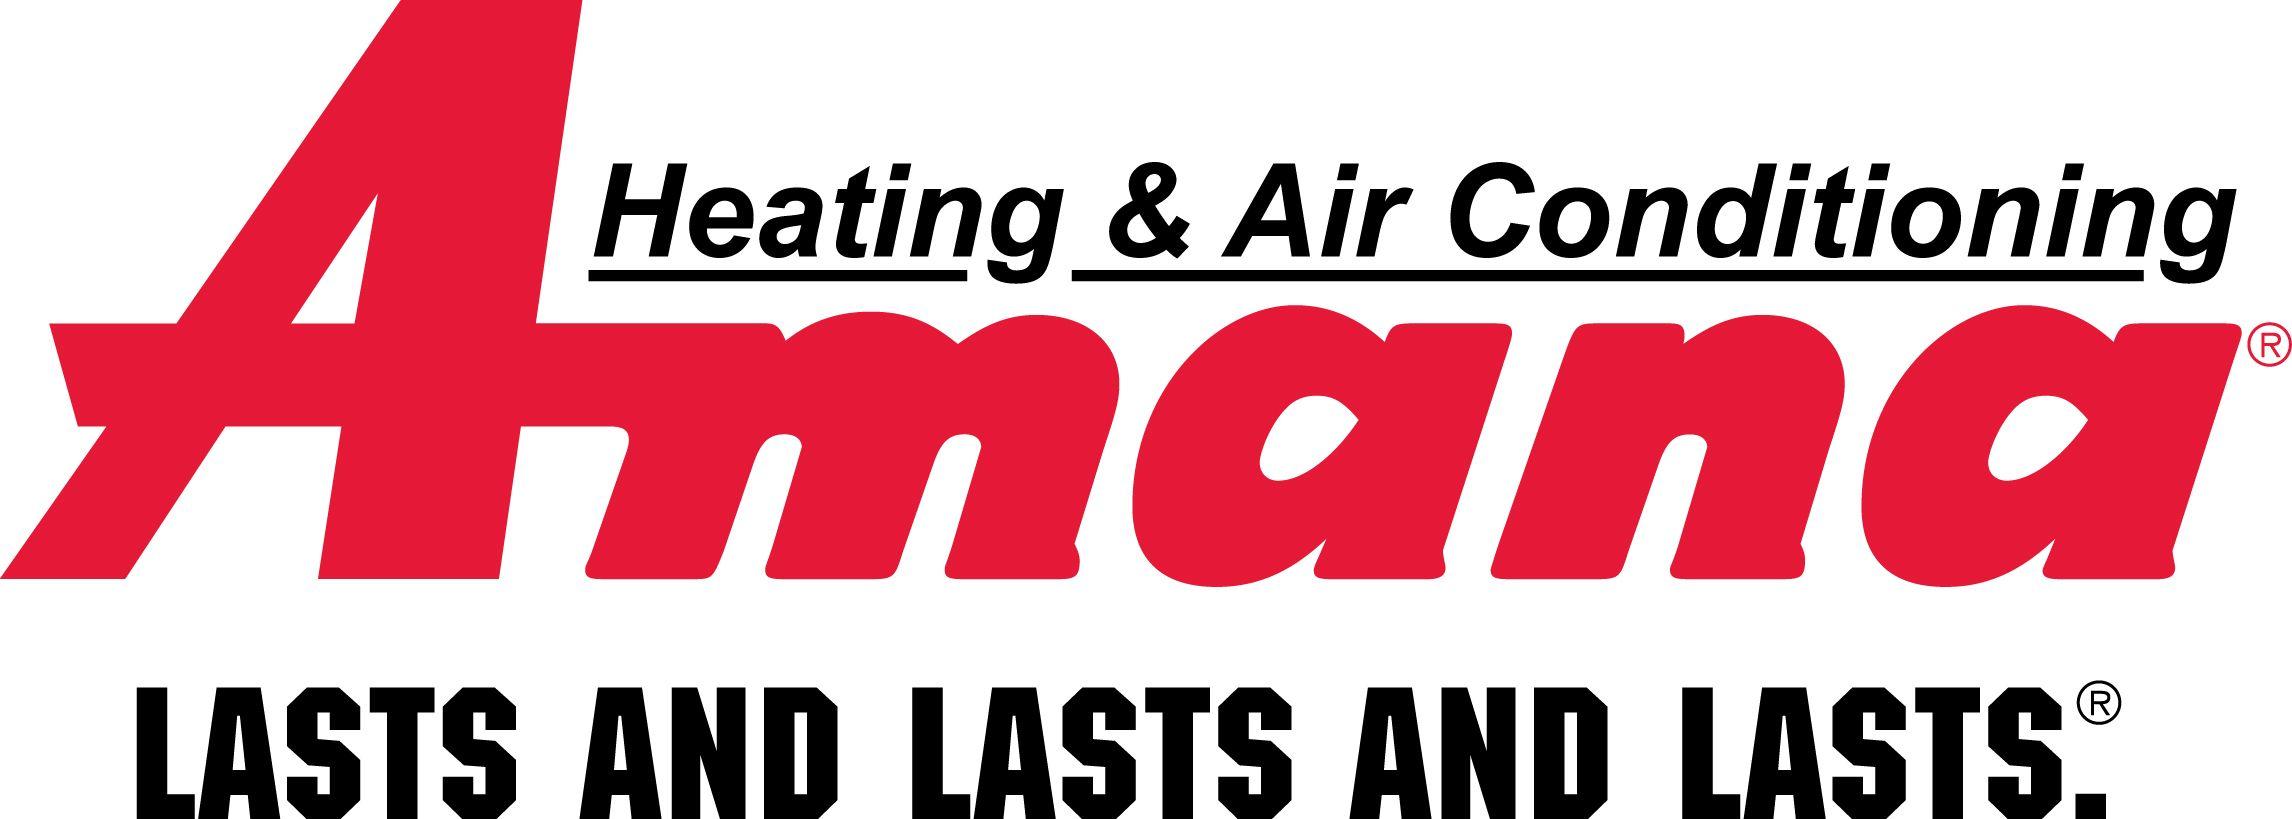 Amana Heating Logo - Amana Heating Air Conditioning Heating and Cooling